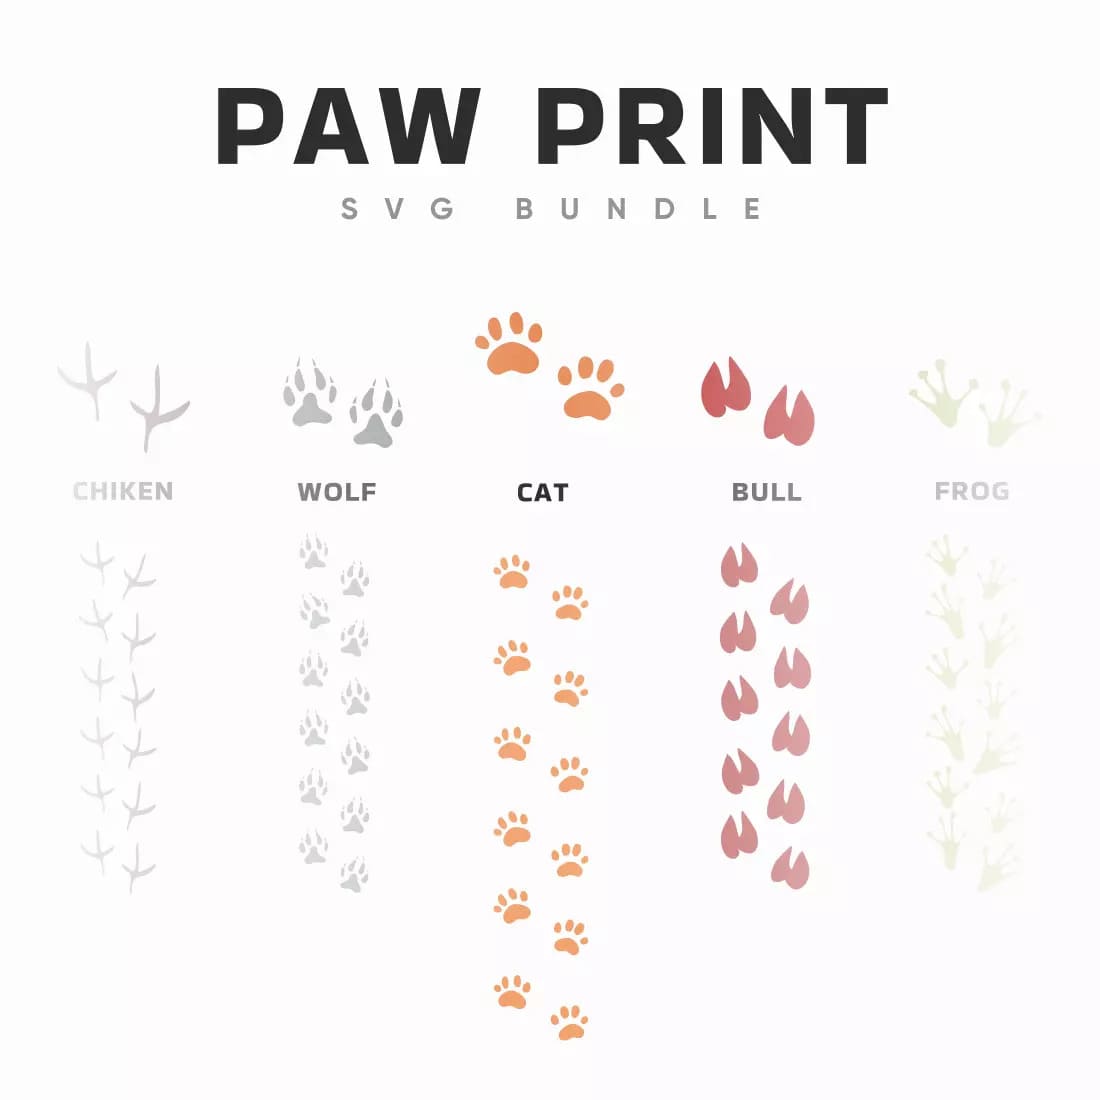 The paw print svg bundle.